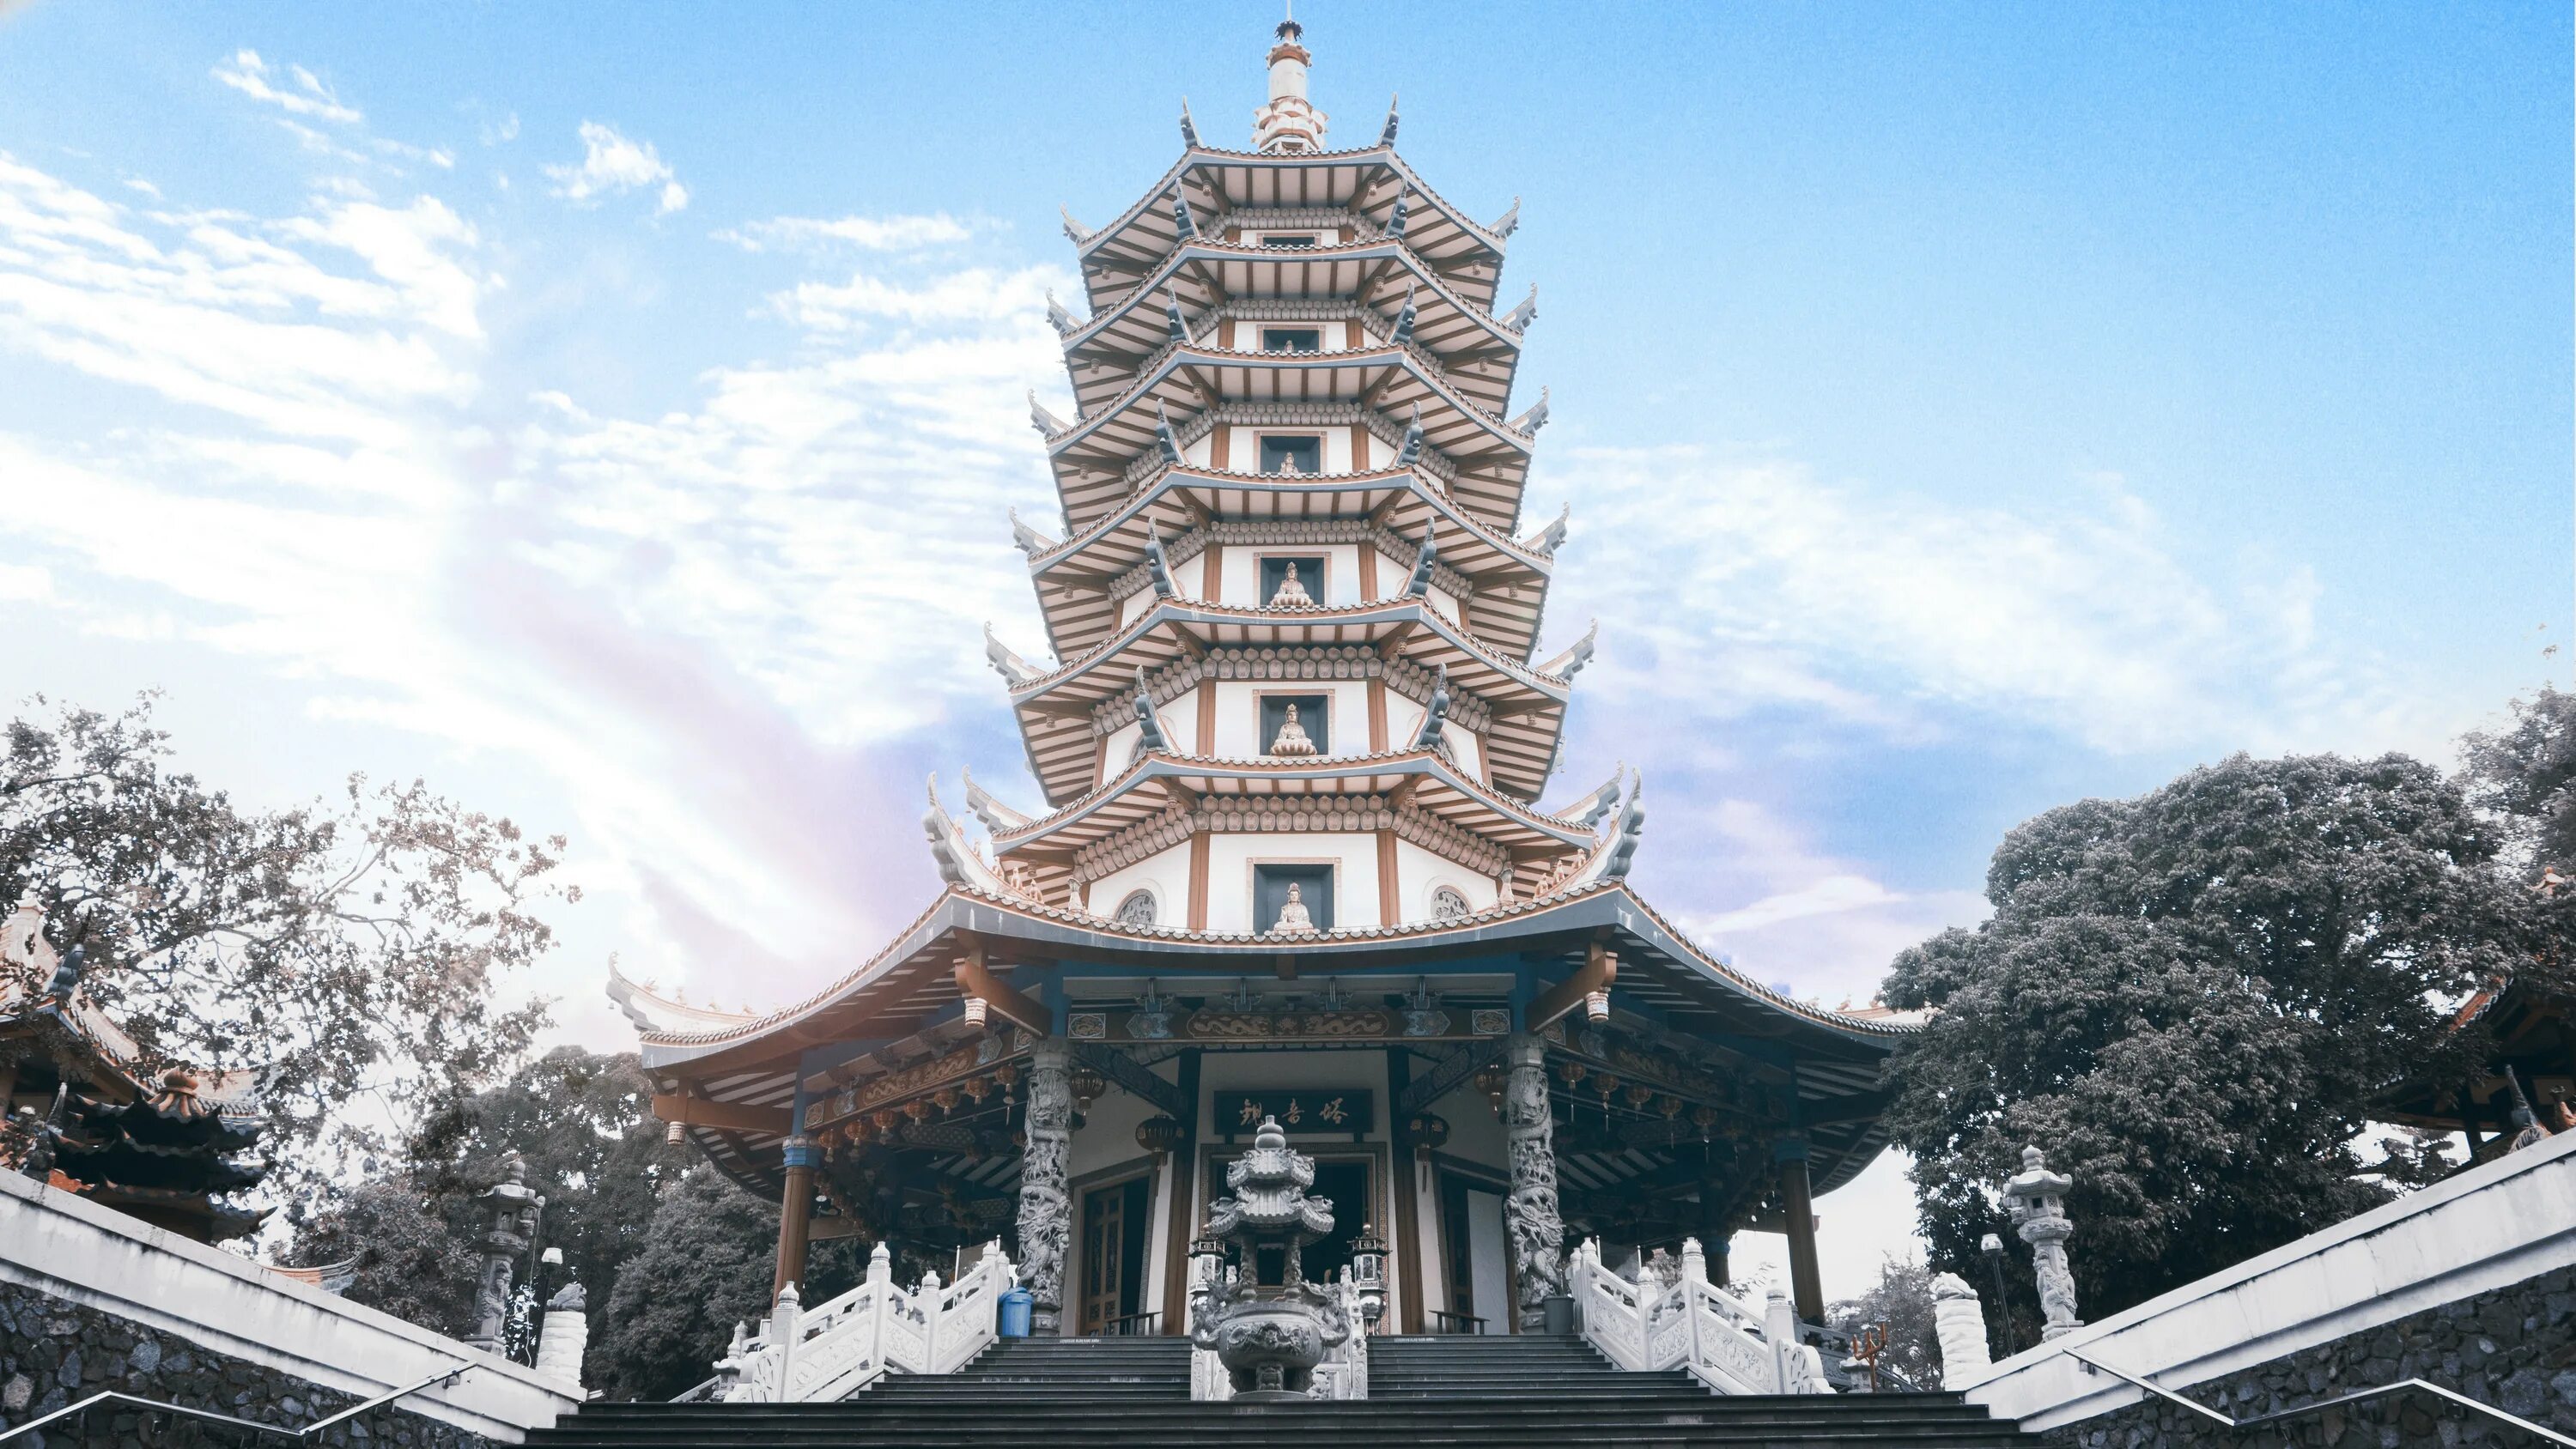 Asia build. Буддийская архитектура пагода. Архитектура Японии, храм пагода. Буддистская архитектура Китая. Буддийский храм-пагода в Японии.